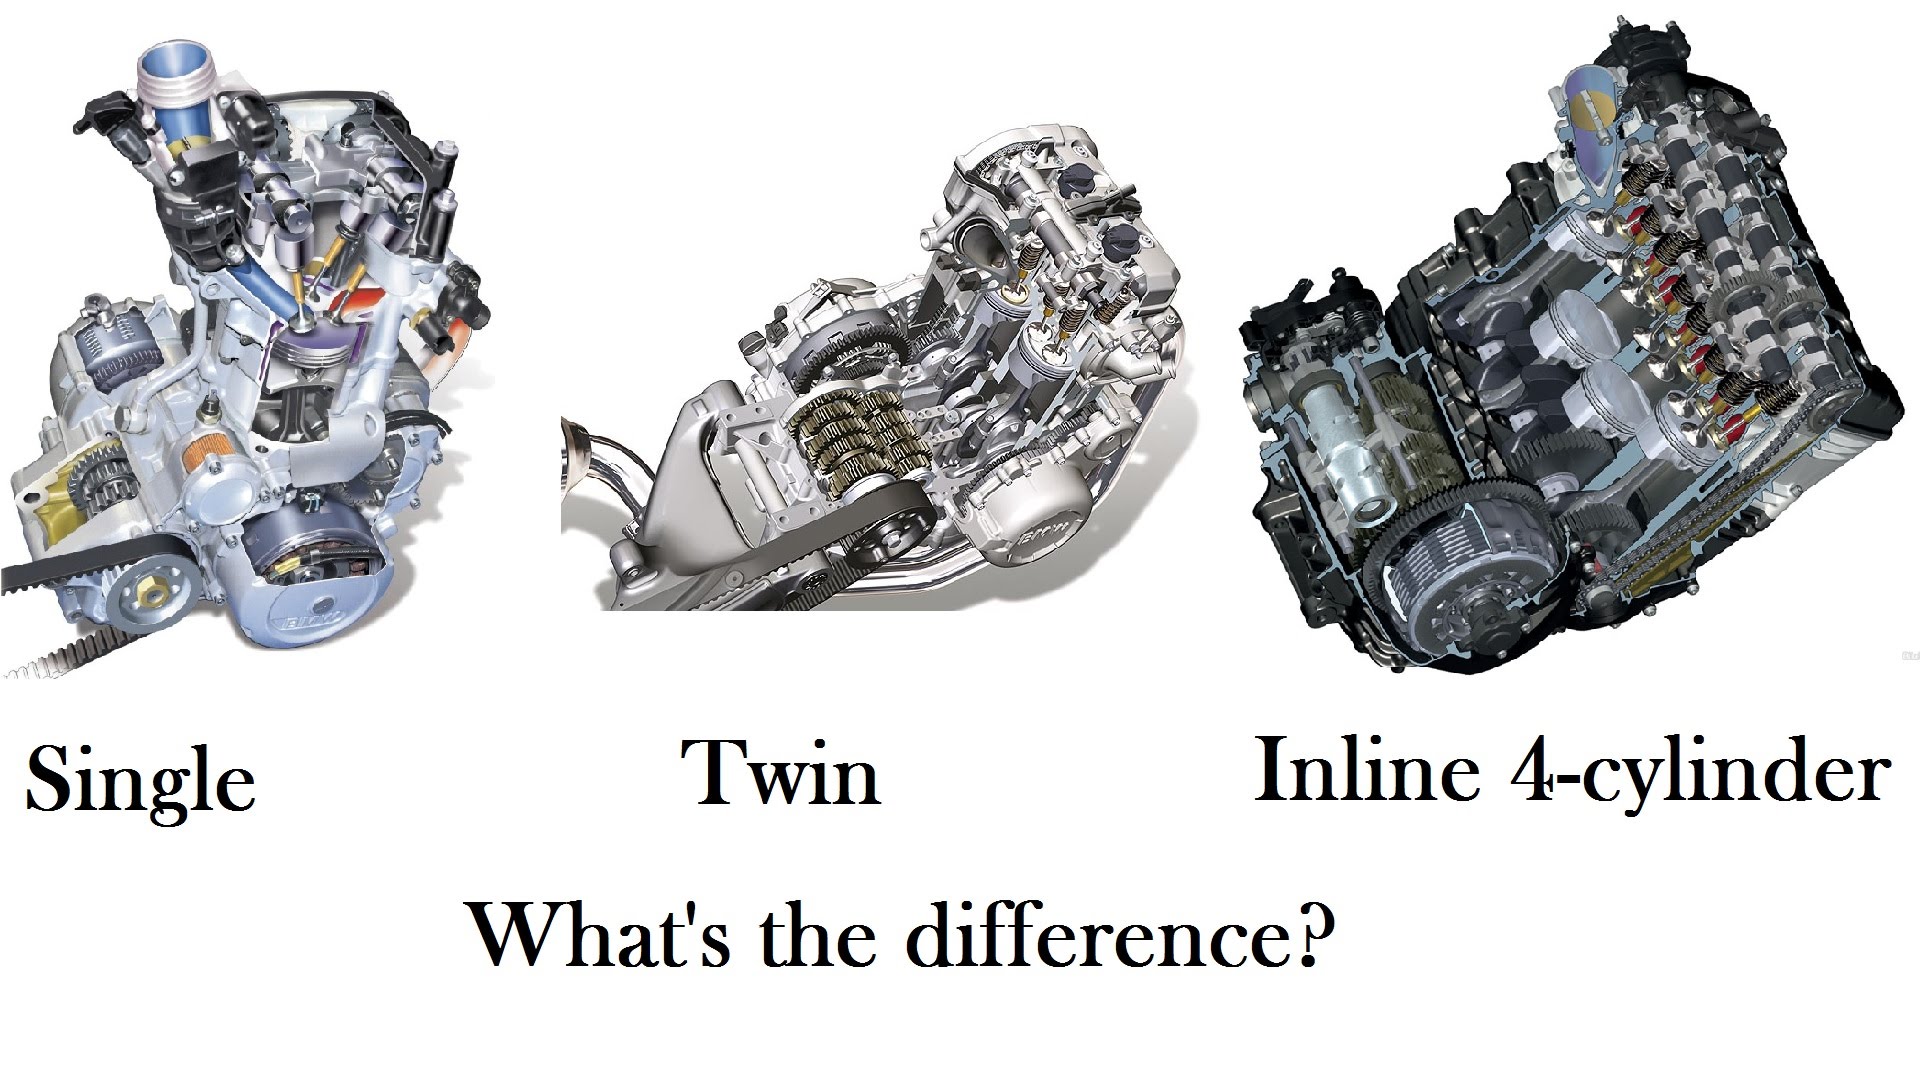 Мотор и двигатель разница. Engine Motor разница. Четырех двигатель эндуро. Parallel Twin engine. Twin v8 inline engine.